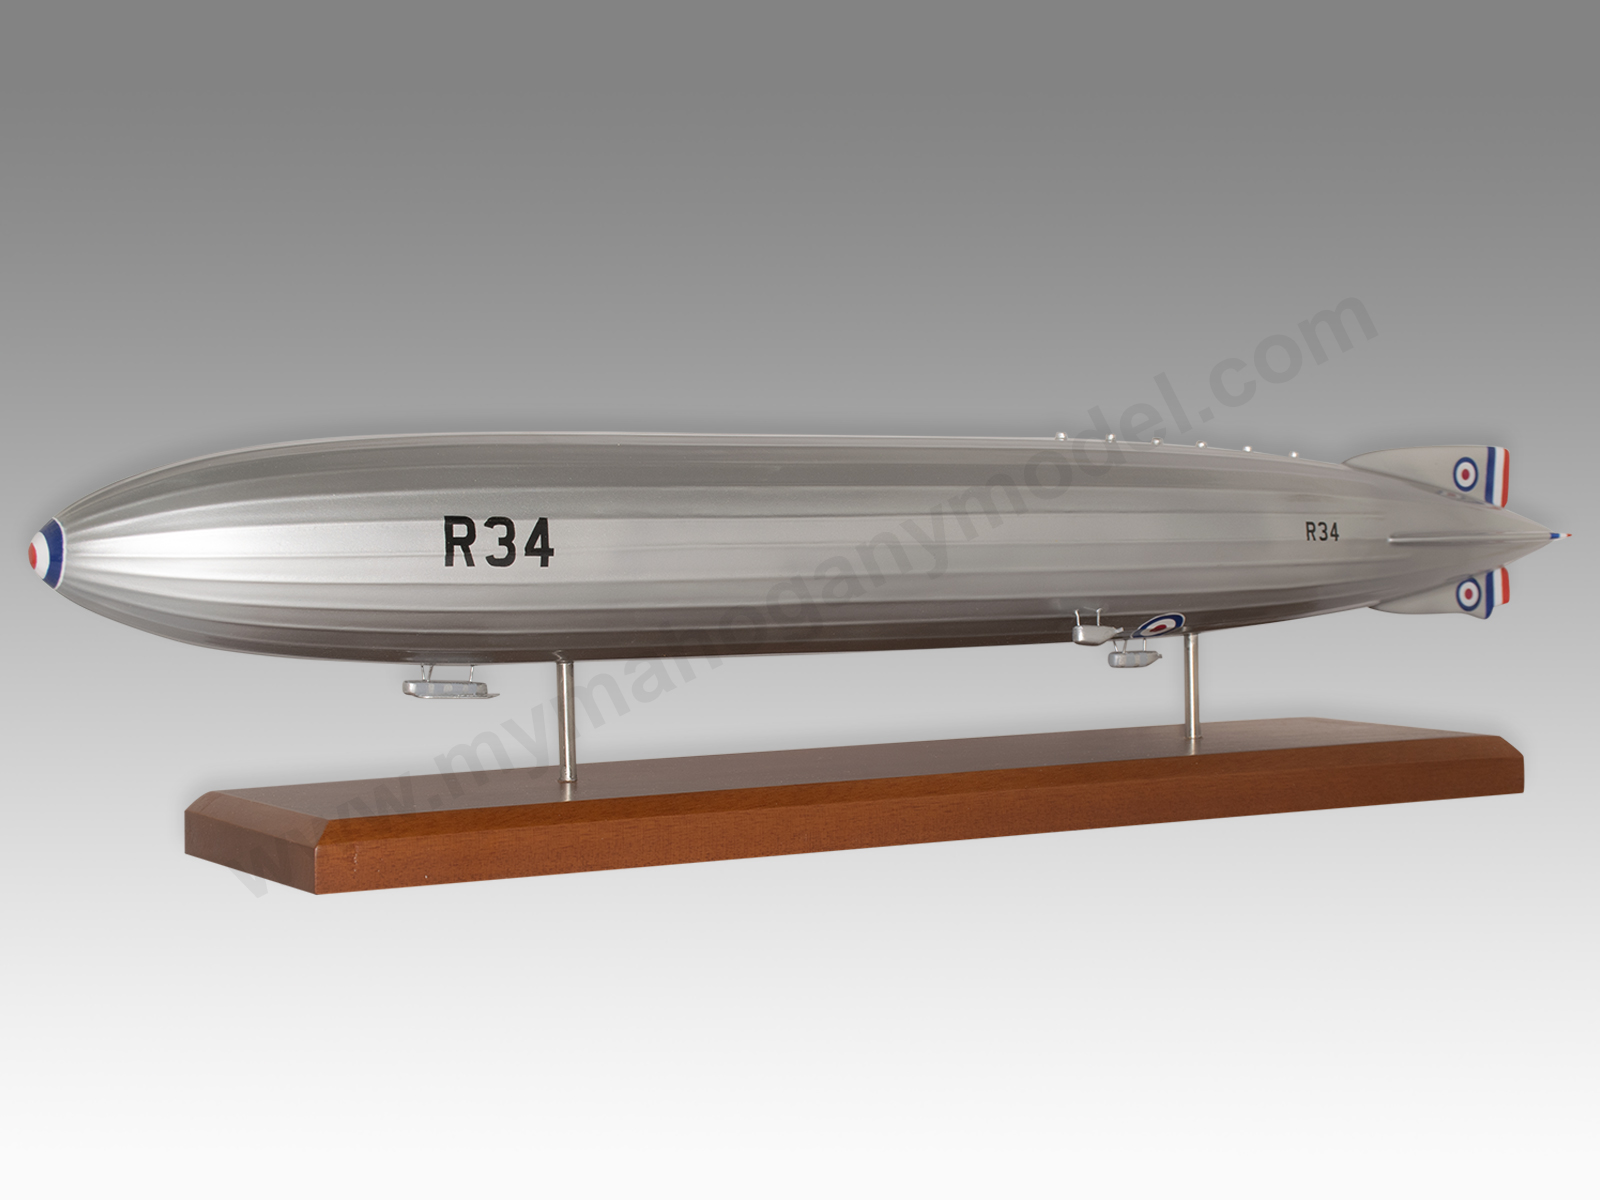 R34 R.34 R 34 Airship Model